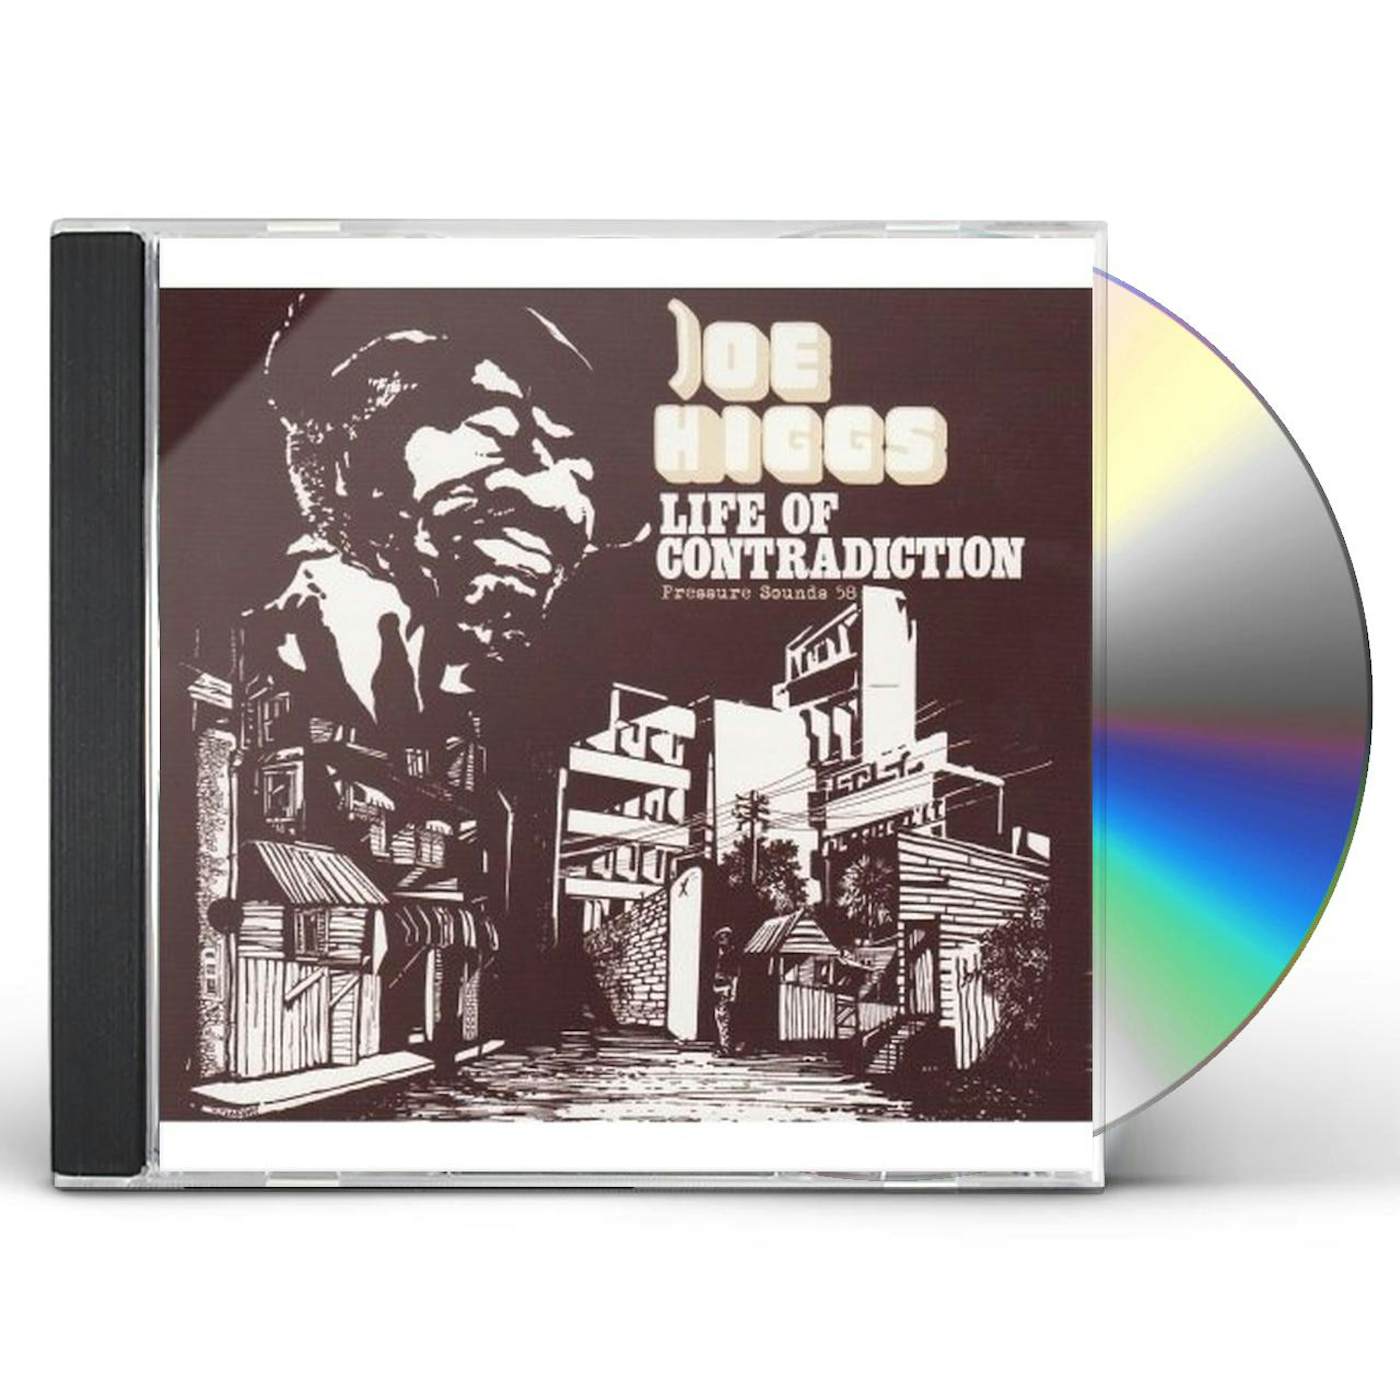 Joe Higgs LIFE OF CONTRADICTION CD